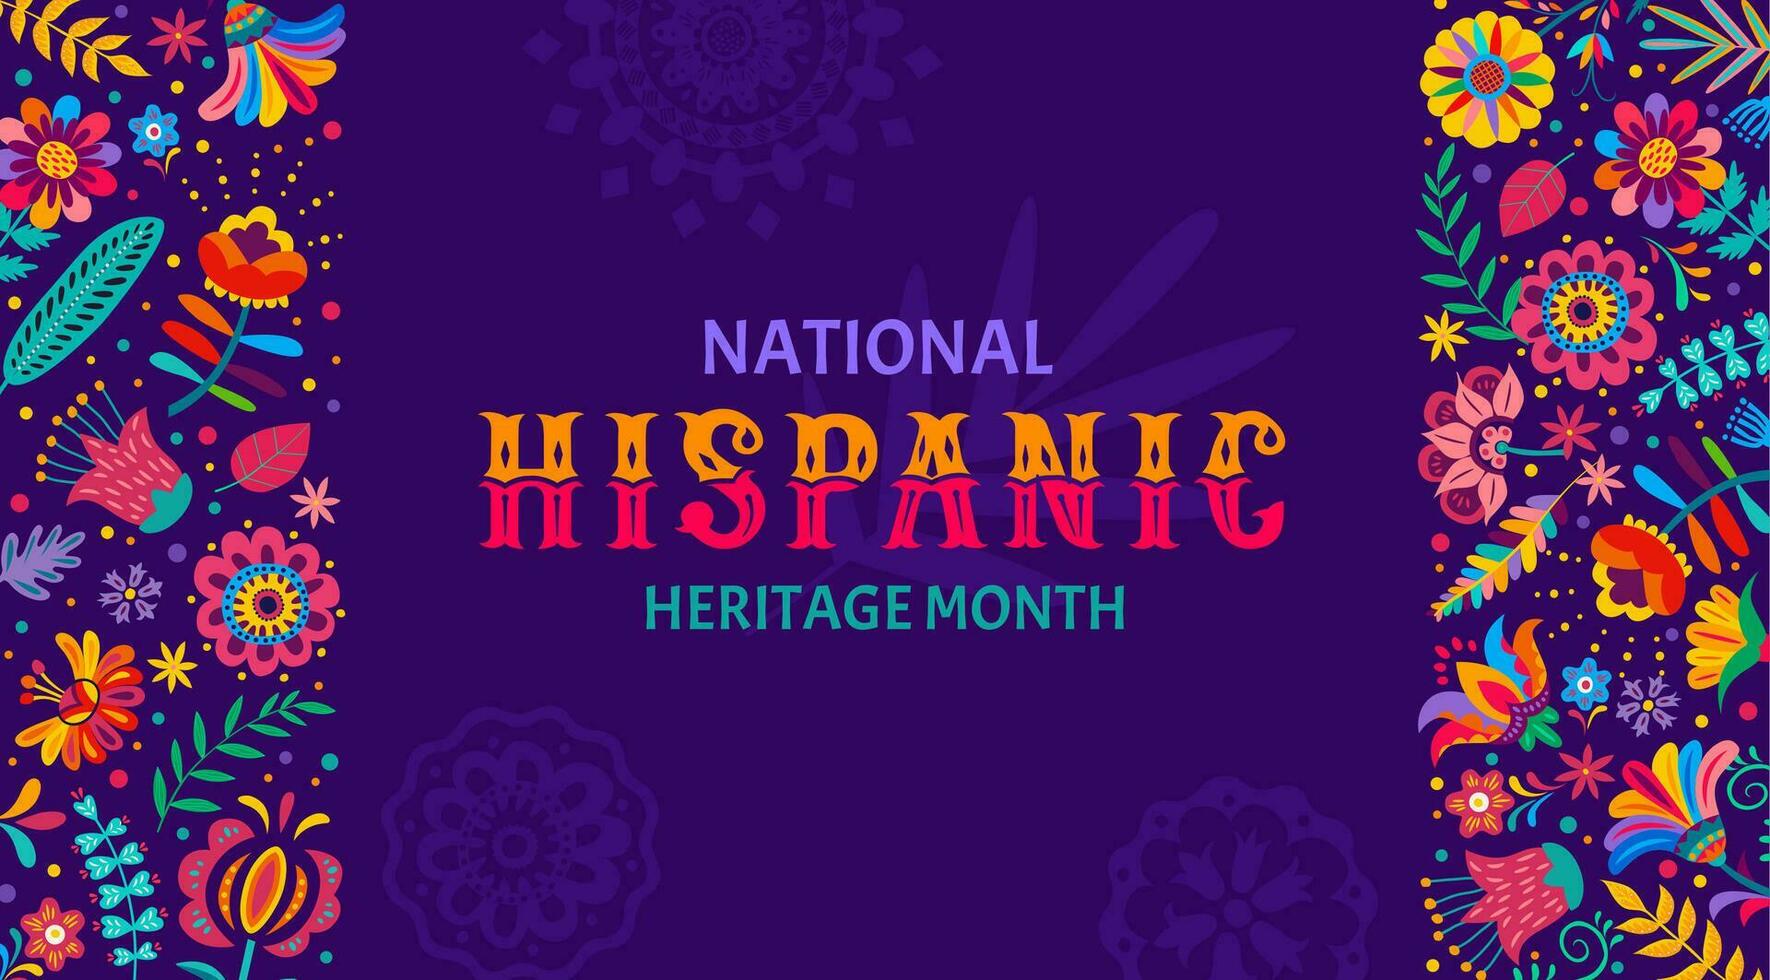 banner del mes nacional de la herencia hispana vector